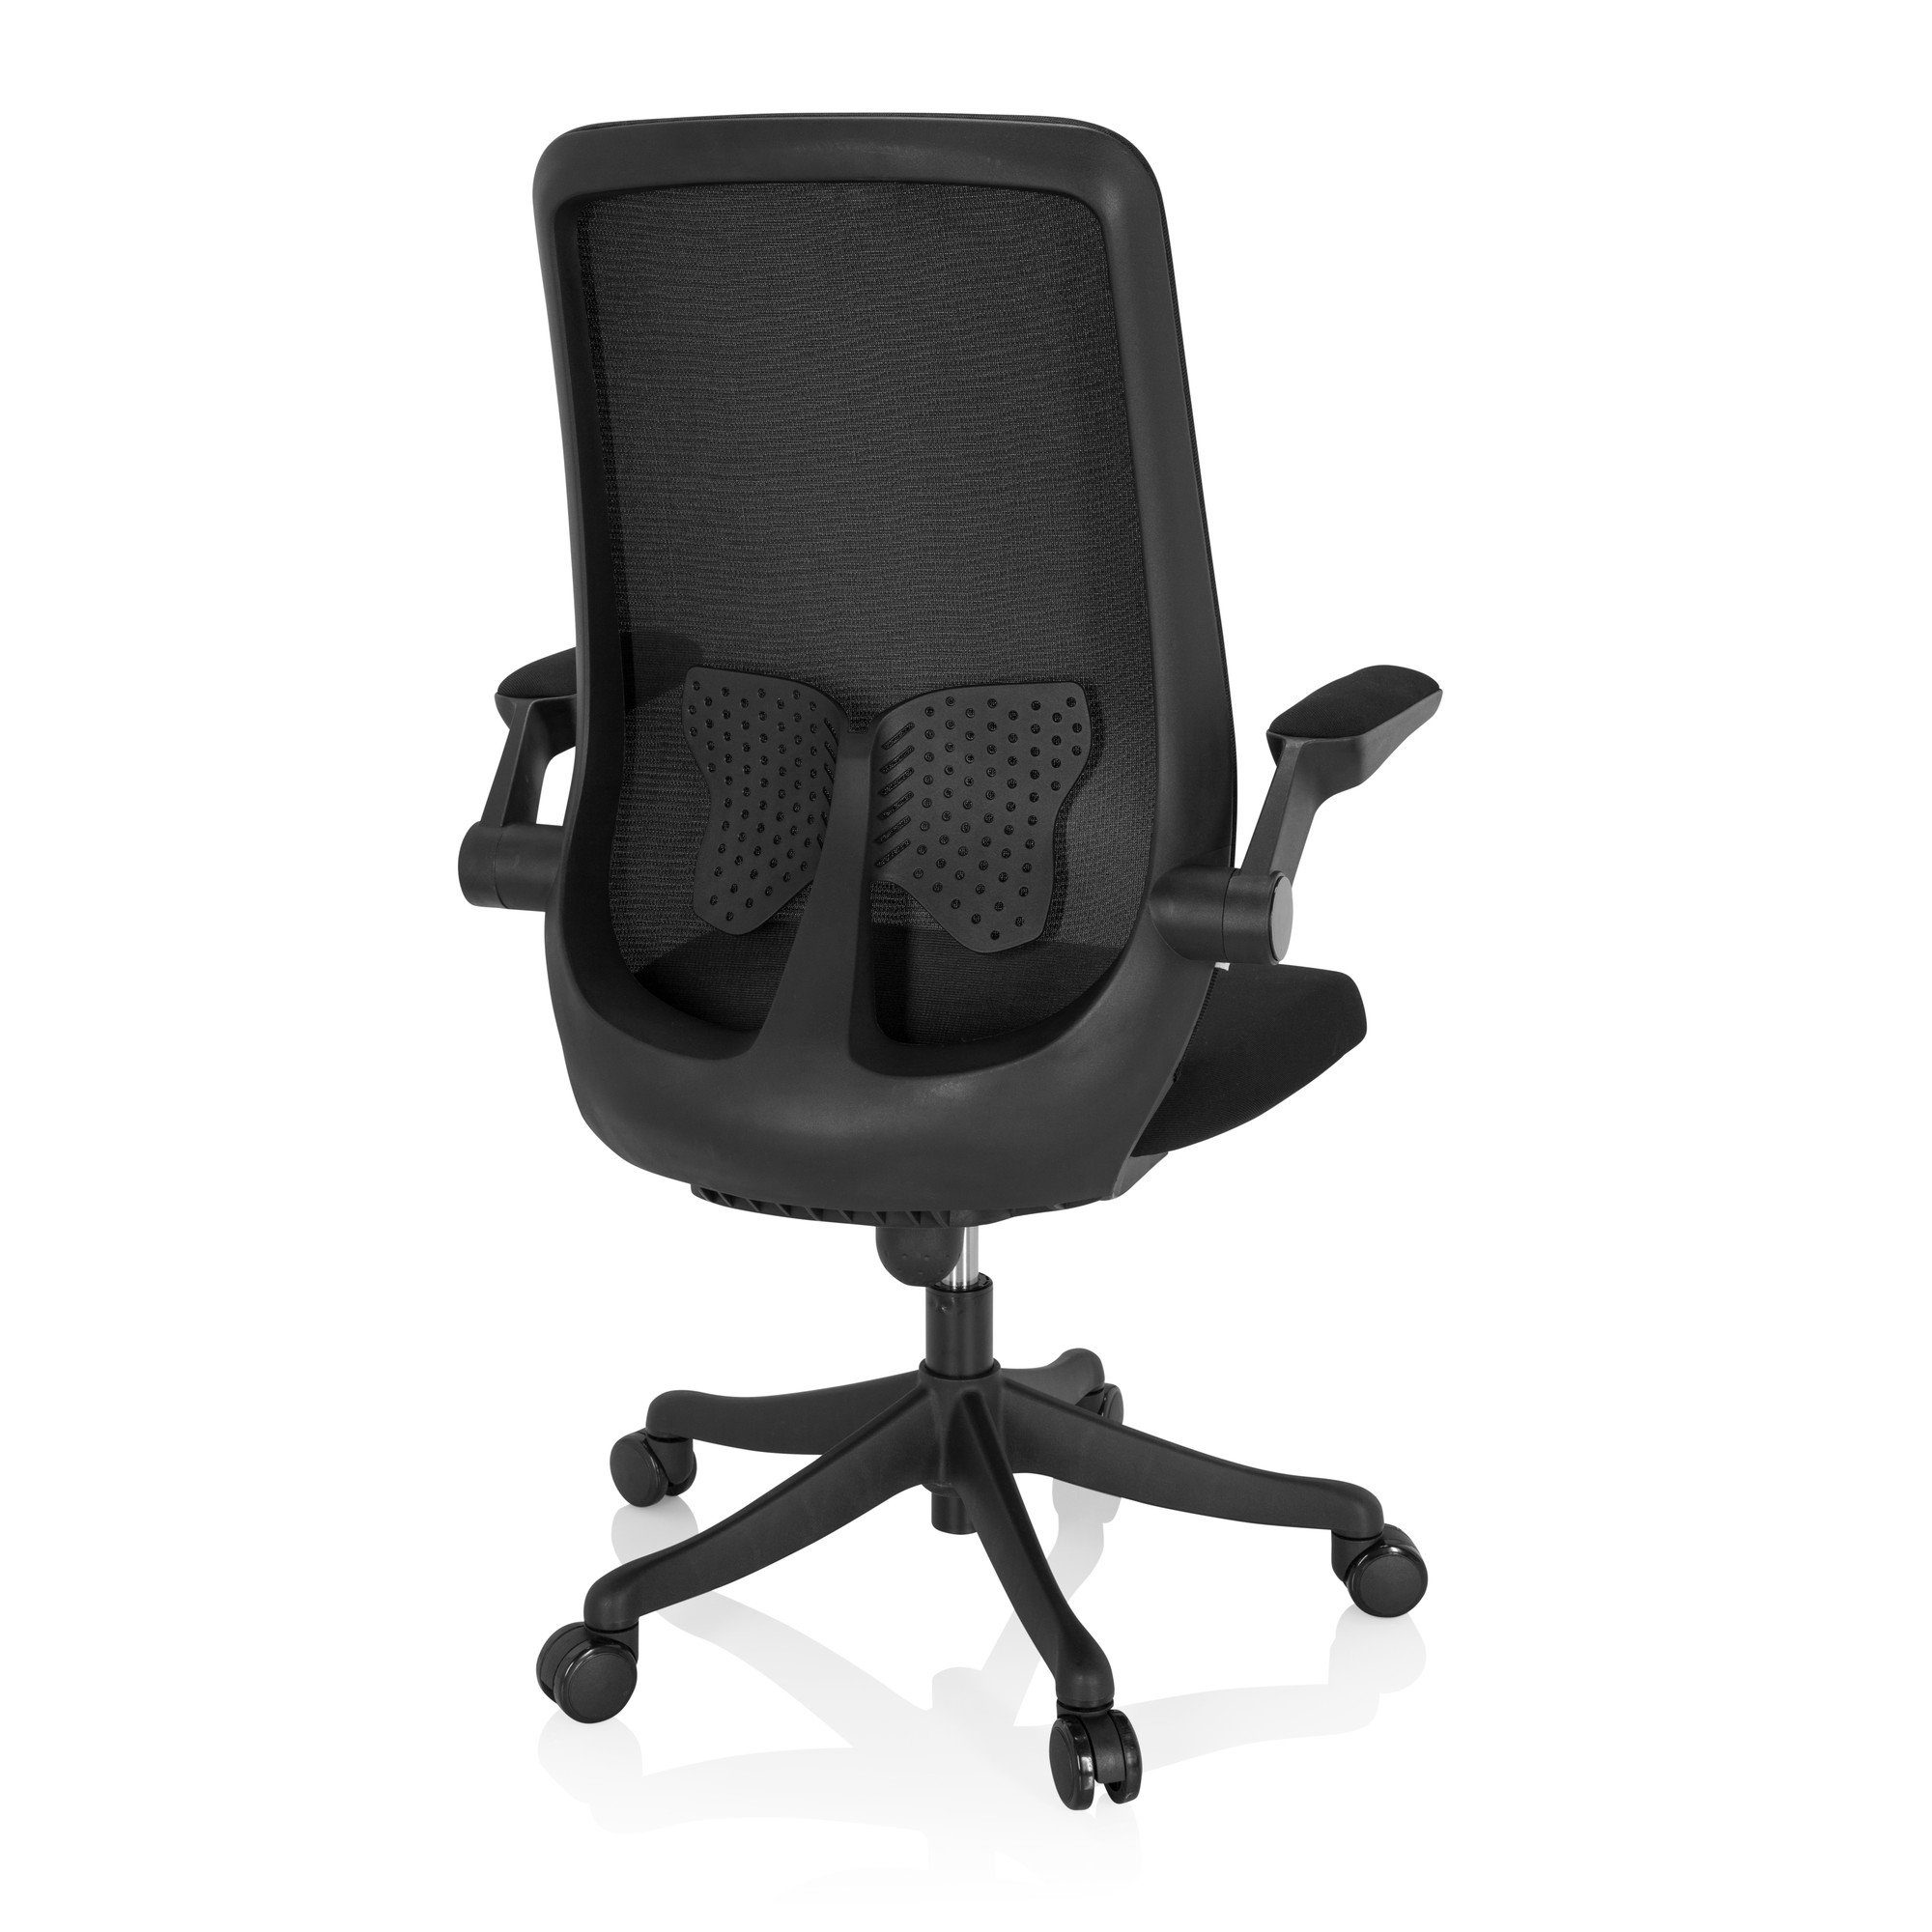 Drehstuhl ergonomisch MIKO (1 OFFICE Schreibtischstuhl hjh St), B Bürostuhl Home Office Stoff/Netzstoff